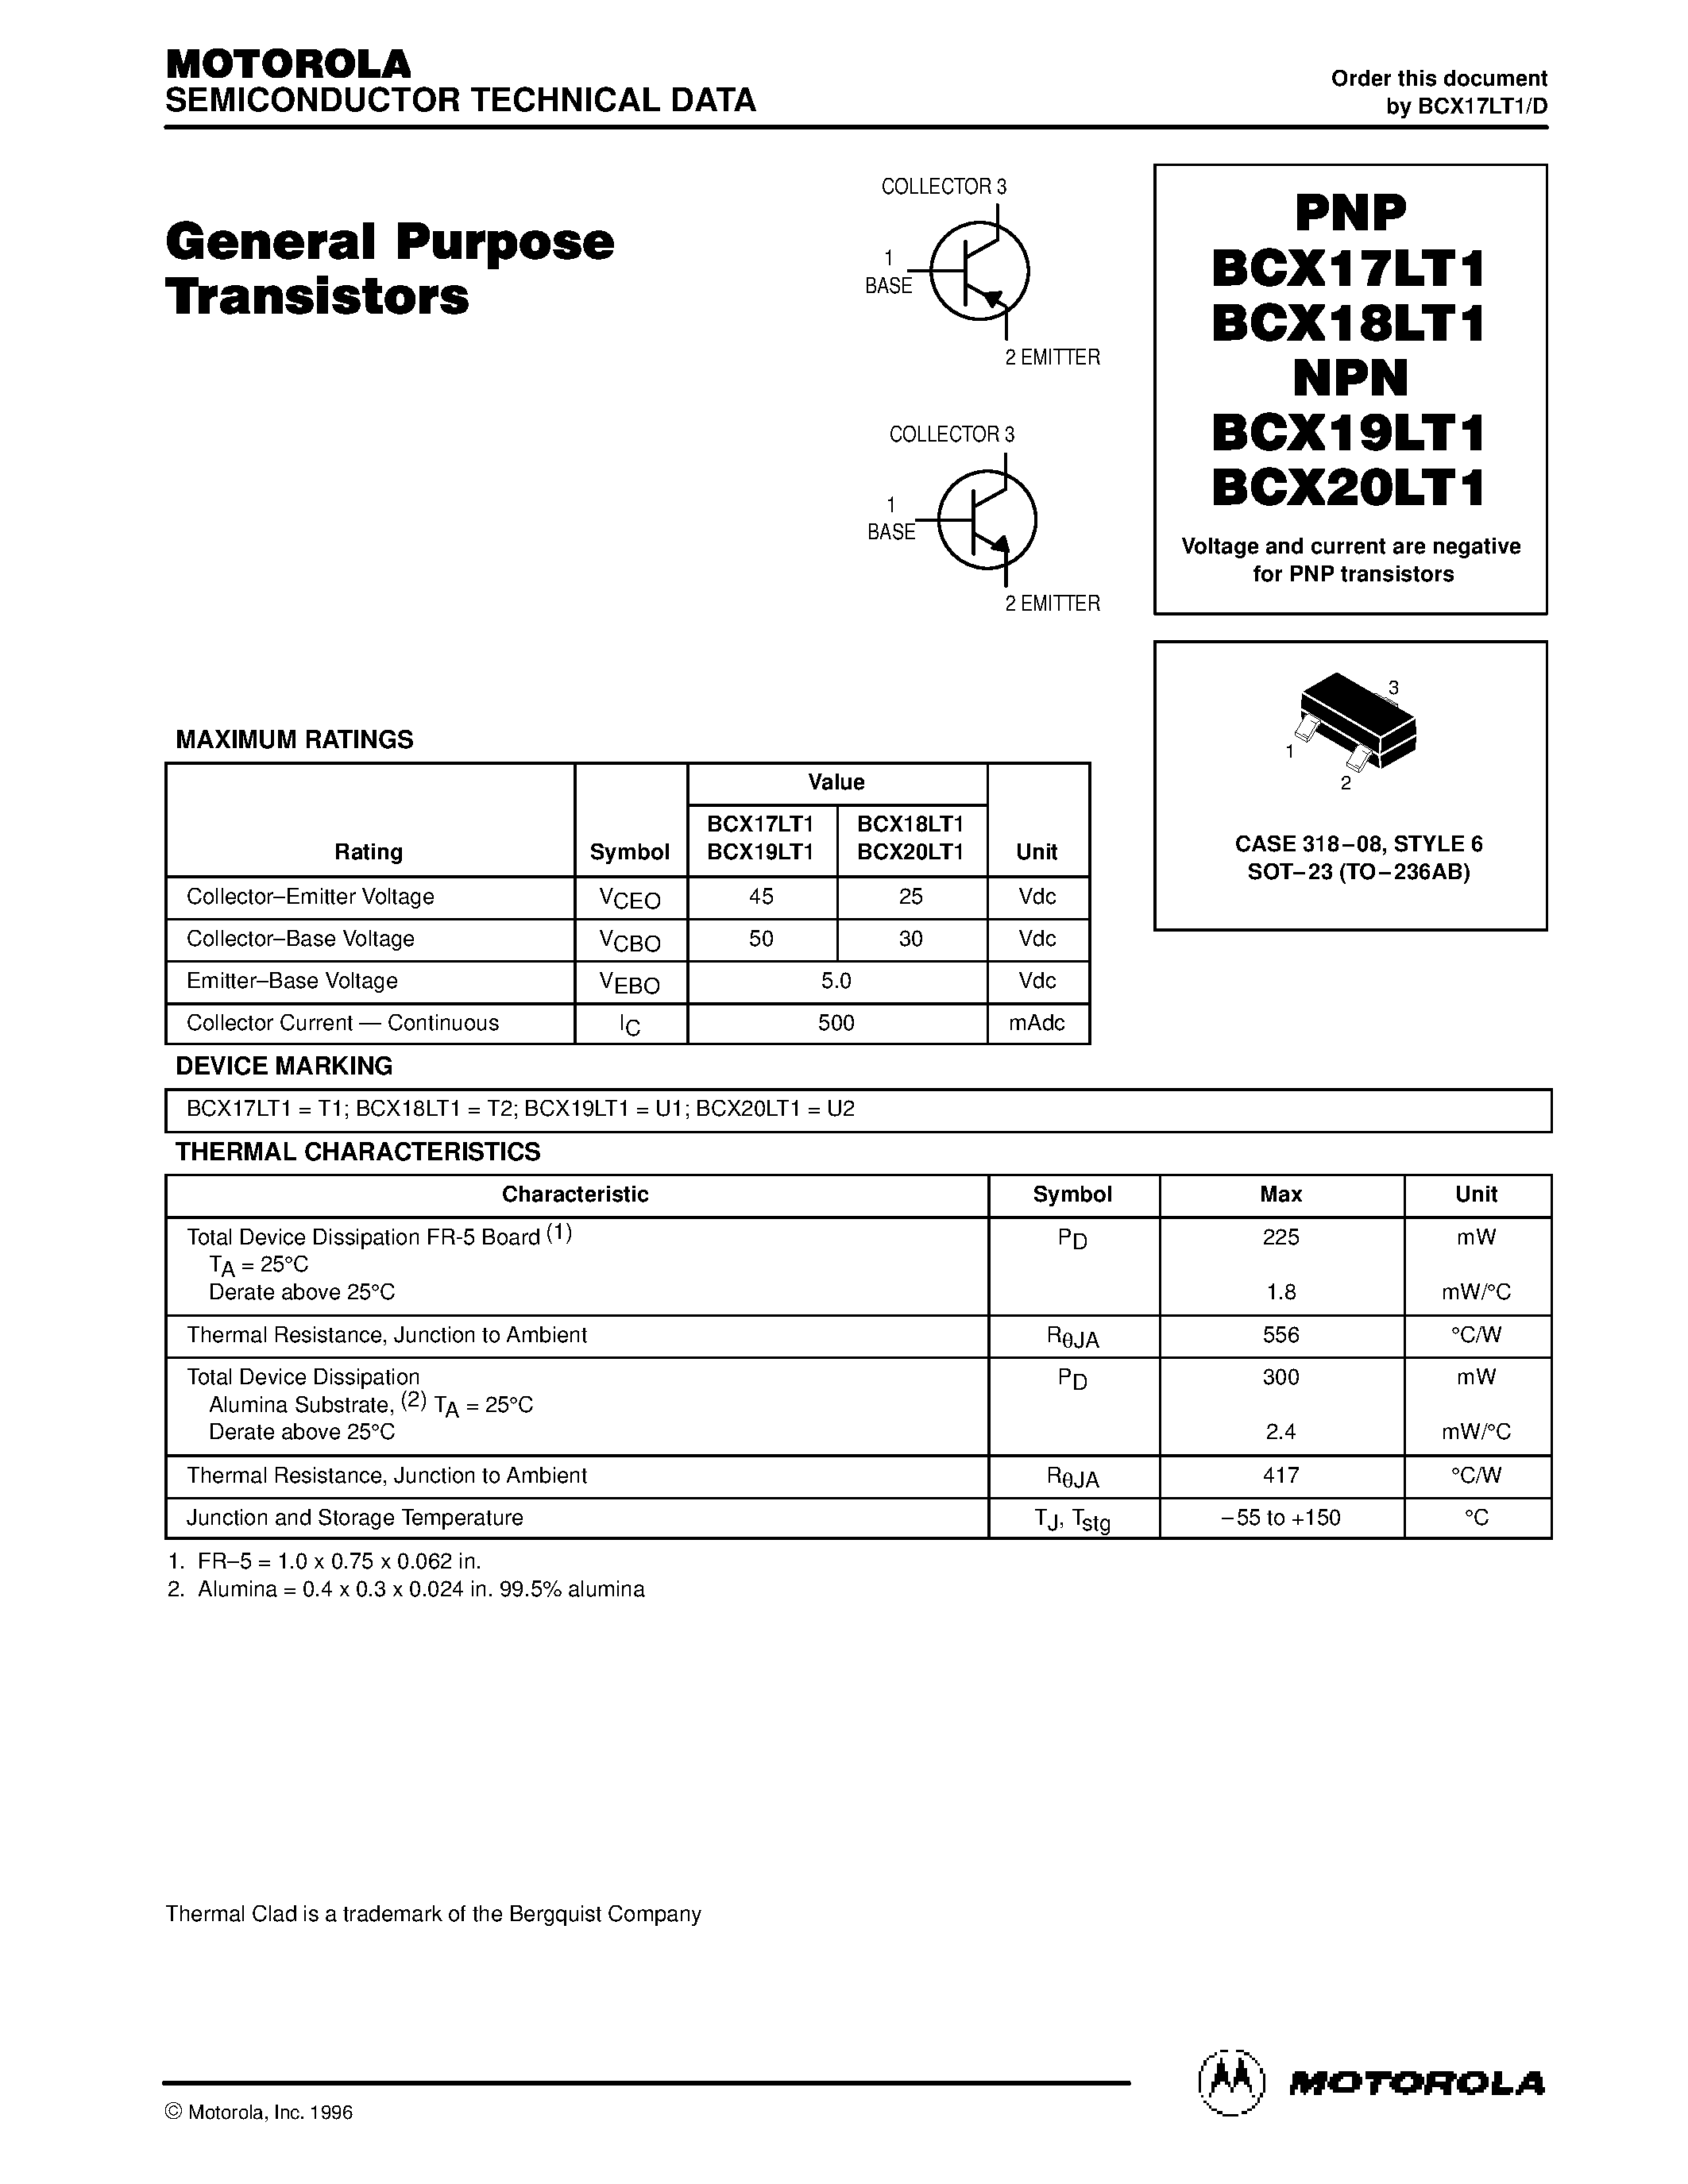 Datasheet BCX20LT1 - General Purpose Transistors page 1